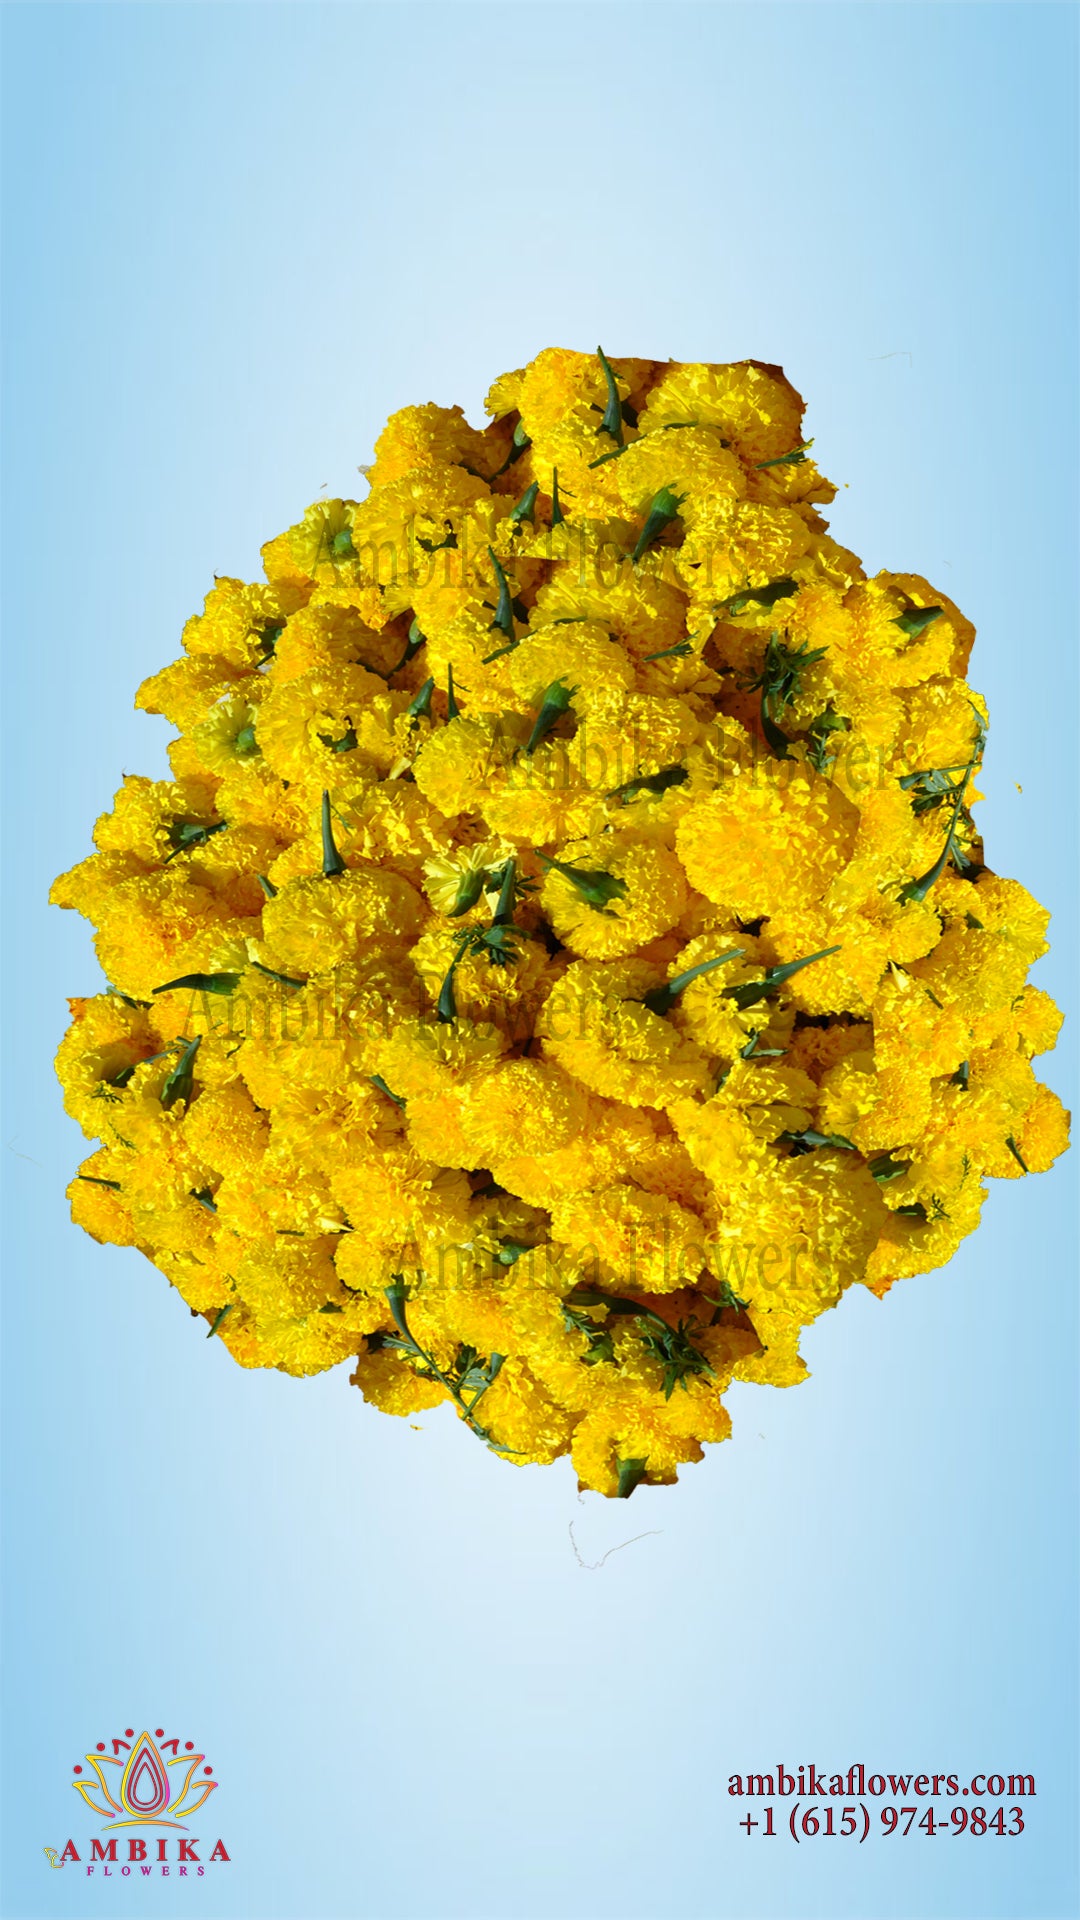 P5002 Marigold Loose Flowers (100g)